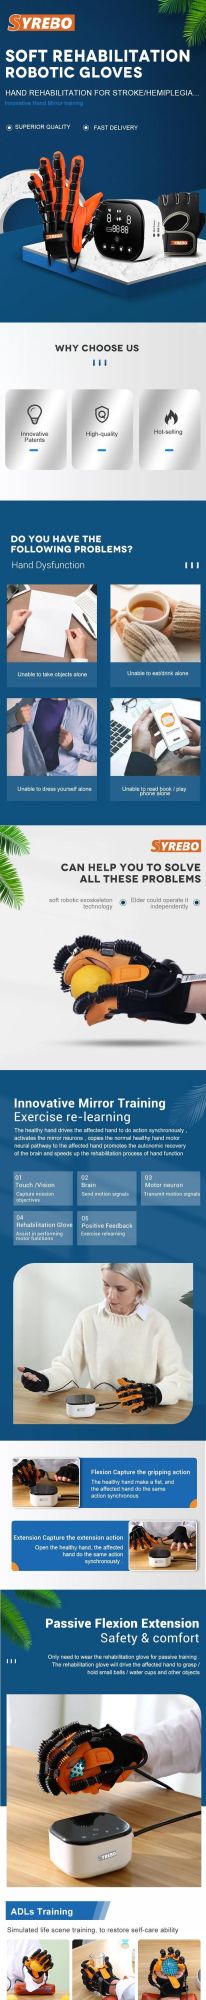 Hand Rehabilitation Equipment Finger Weakness Training Physiotherapy Rehabilitation Glove